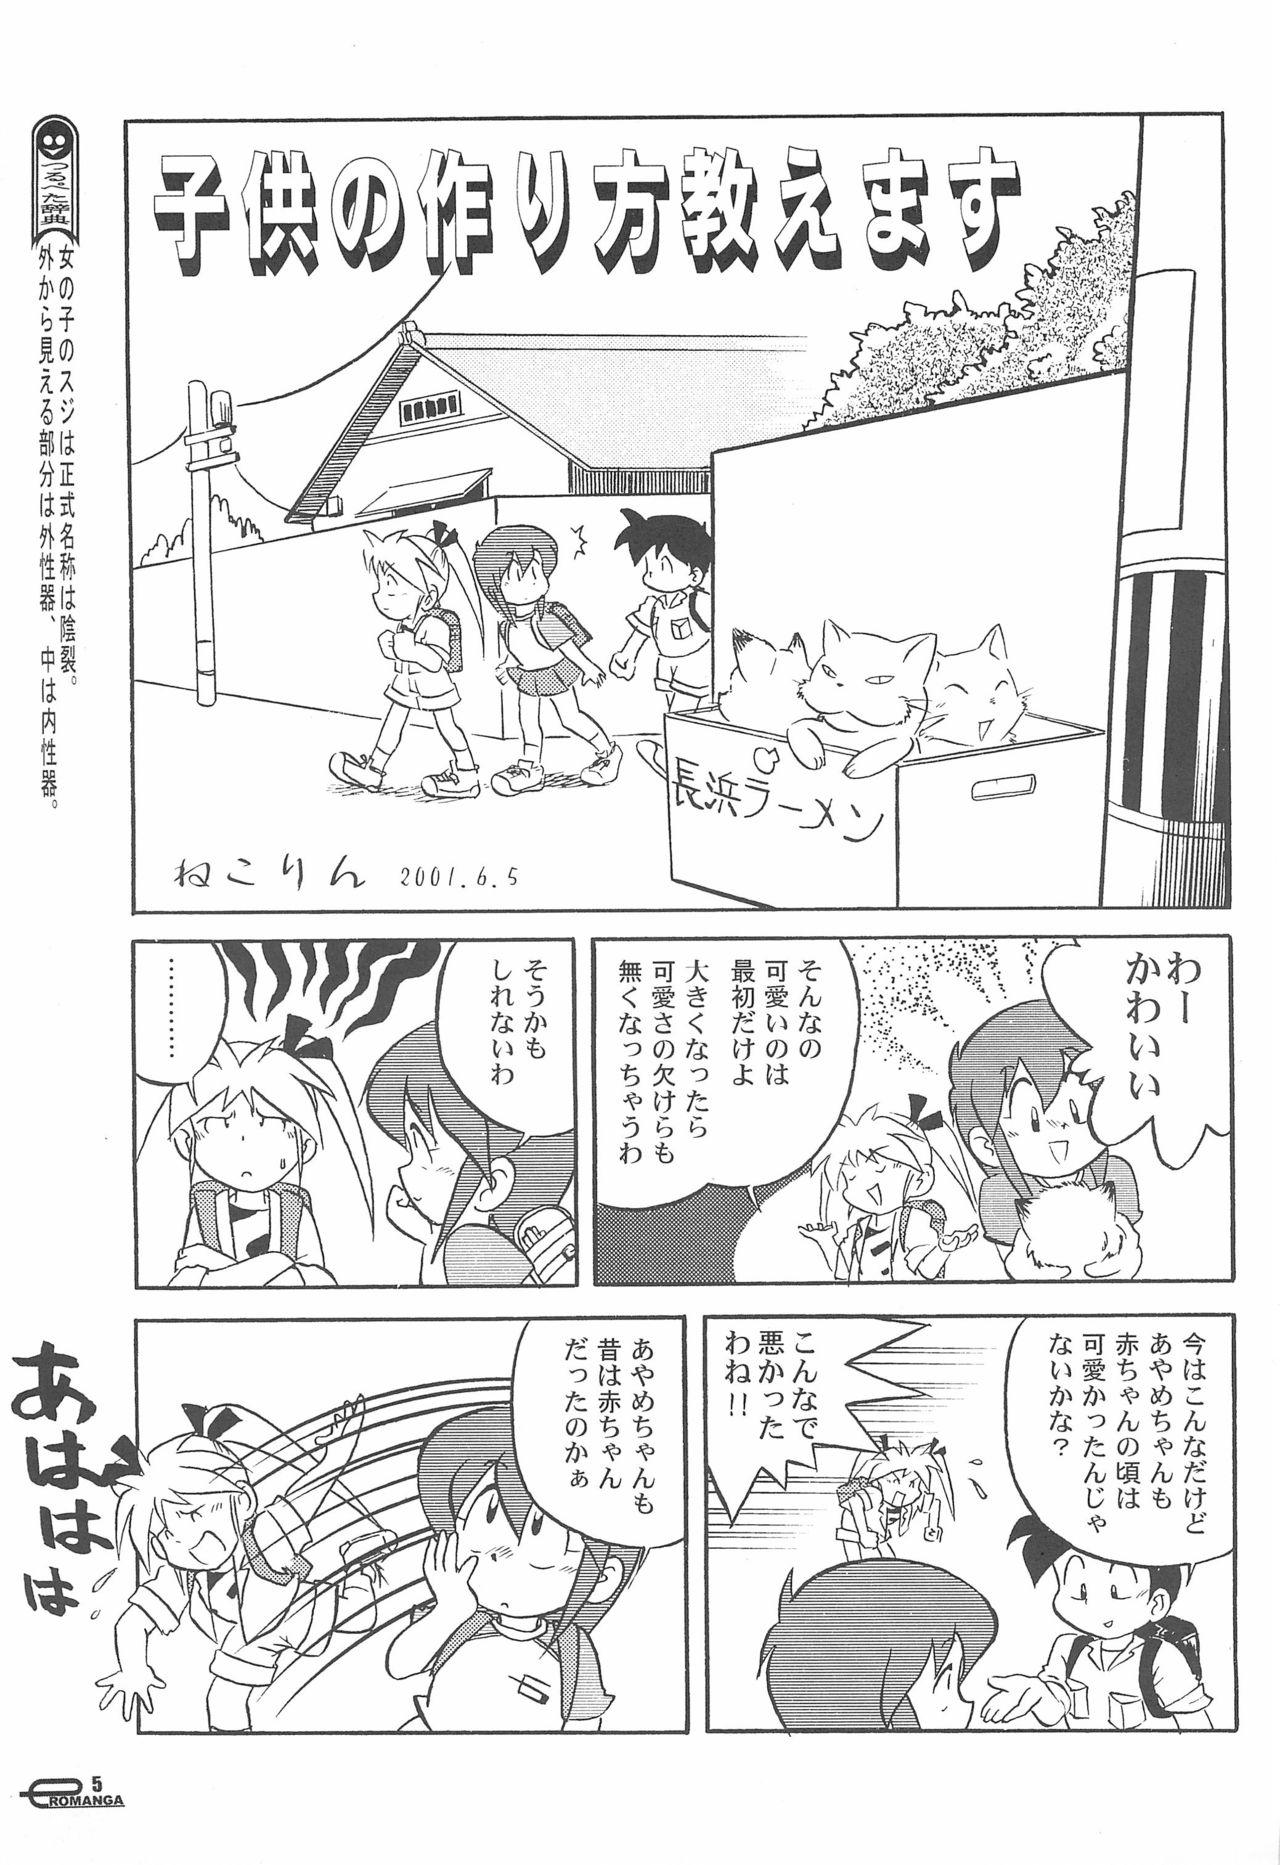 Mamando Manga Science Onna no ko no Himitsu - Manga science Lezbi - Page 7